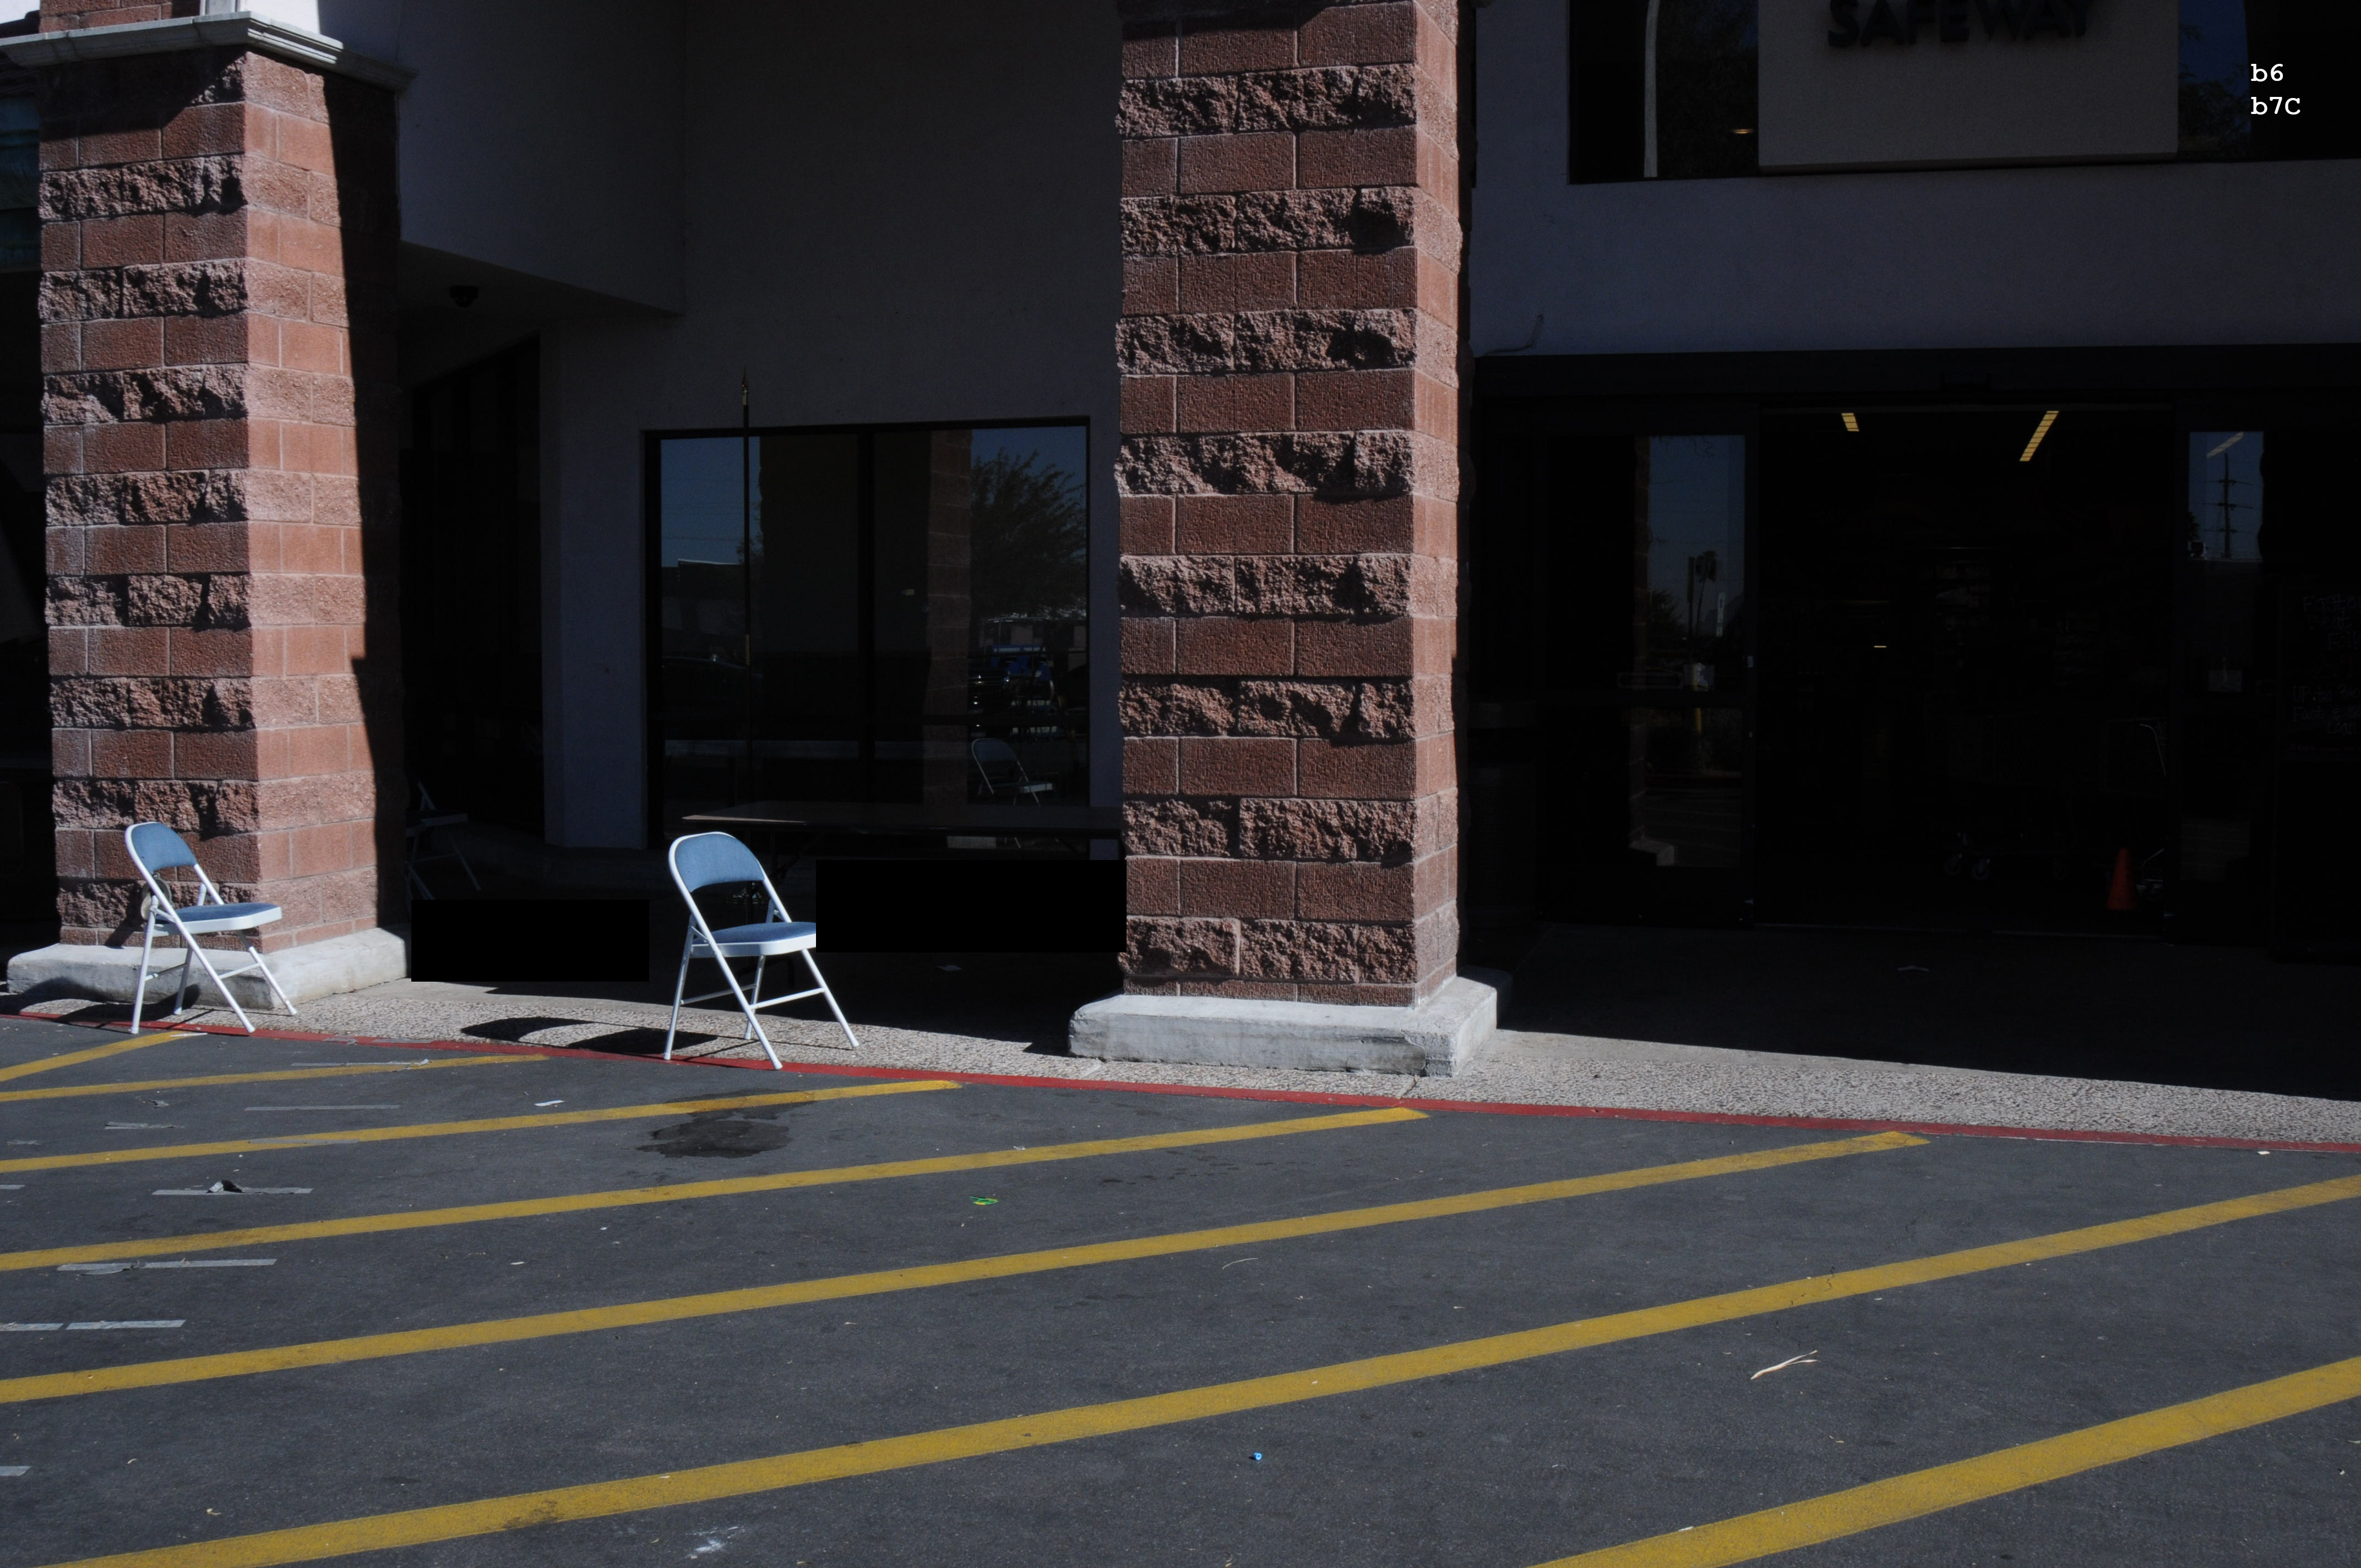 2011 Tucson Shooting Crime Scene - Photograph 466